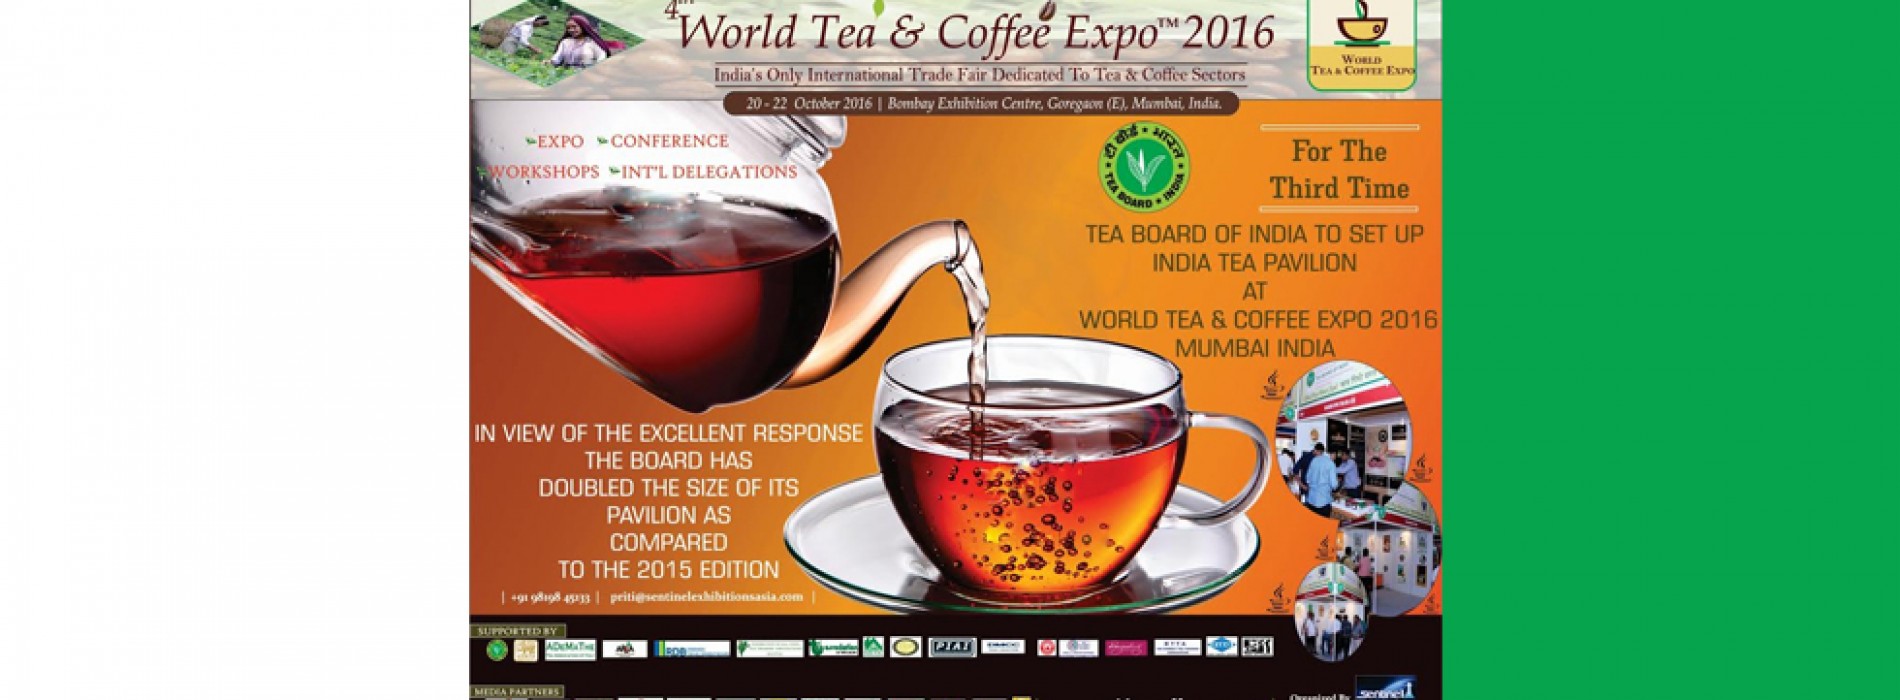 Tea Board of India partners with World Tea Coffee Expo Mumbai